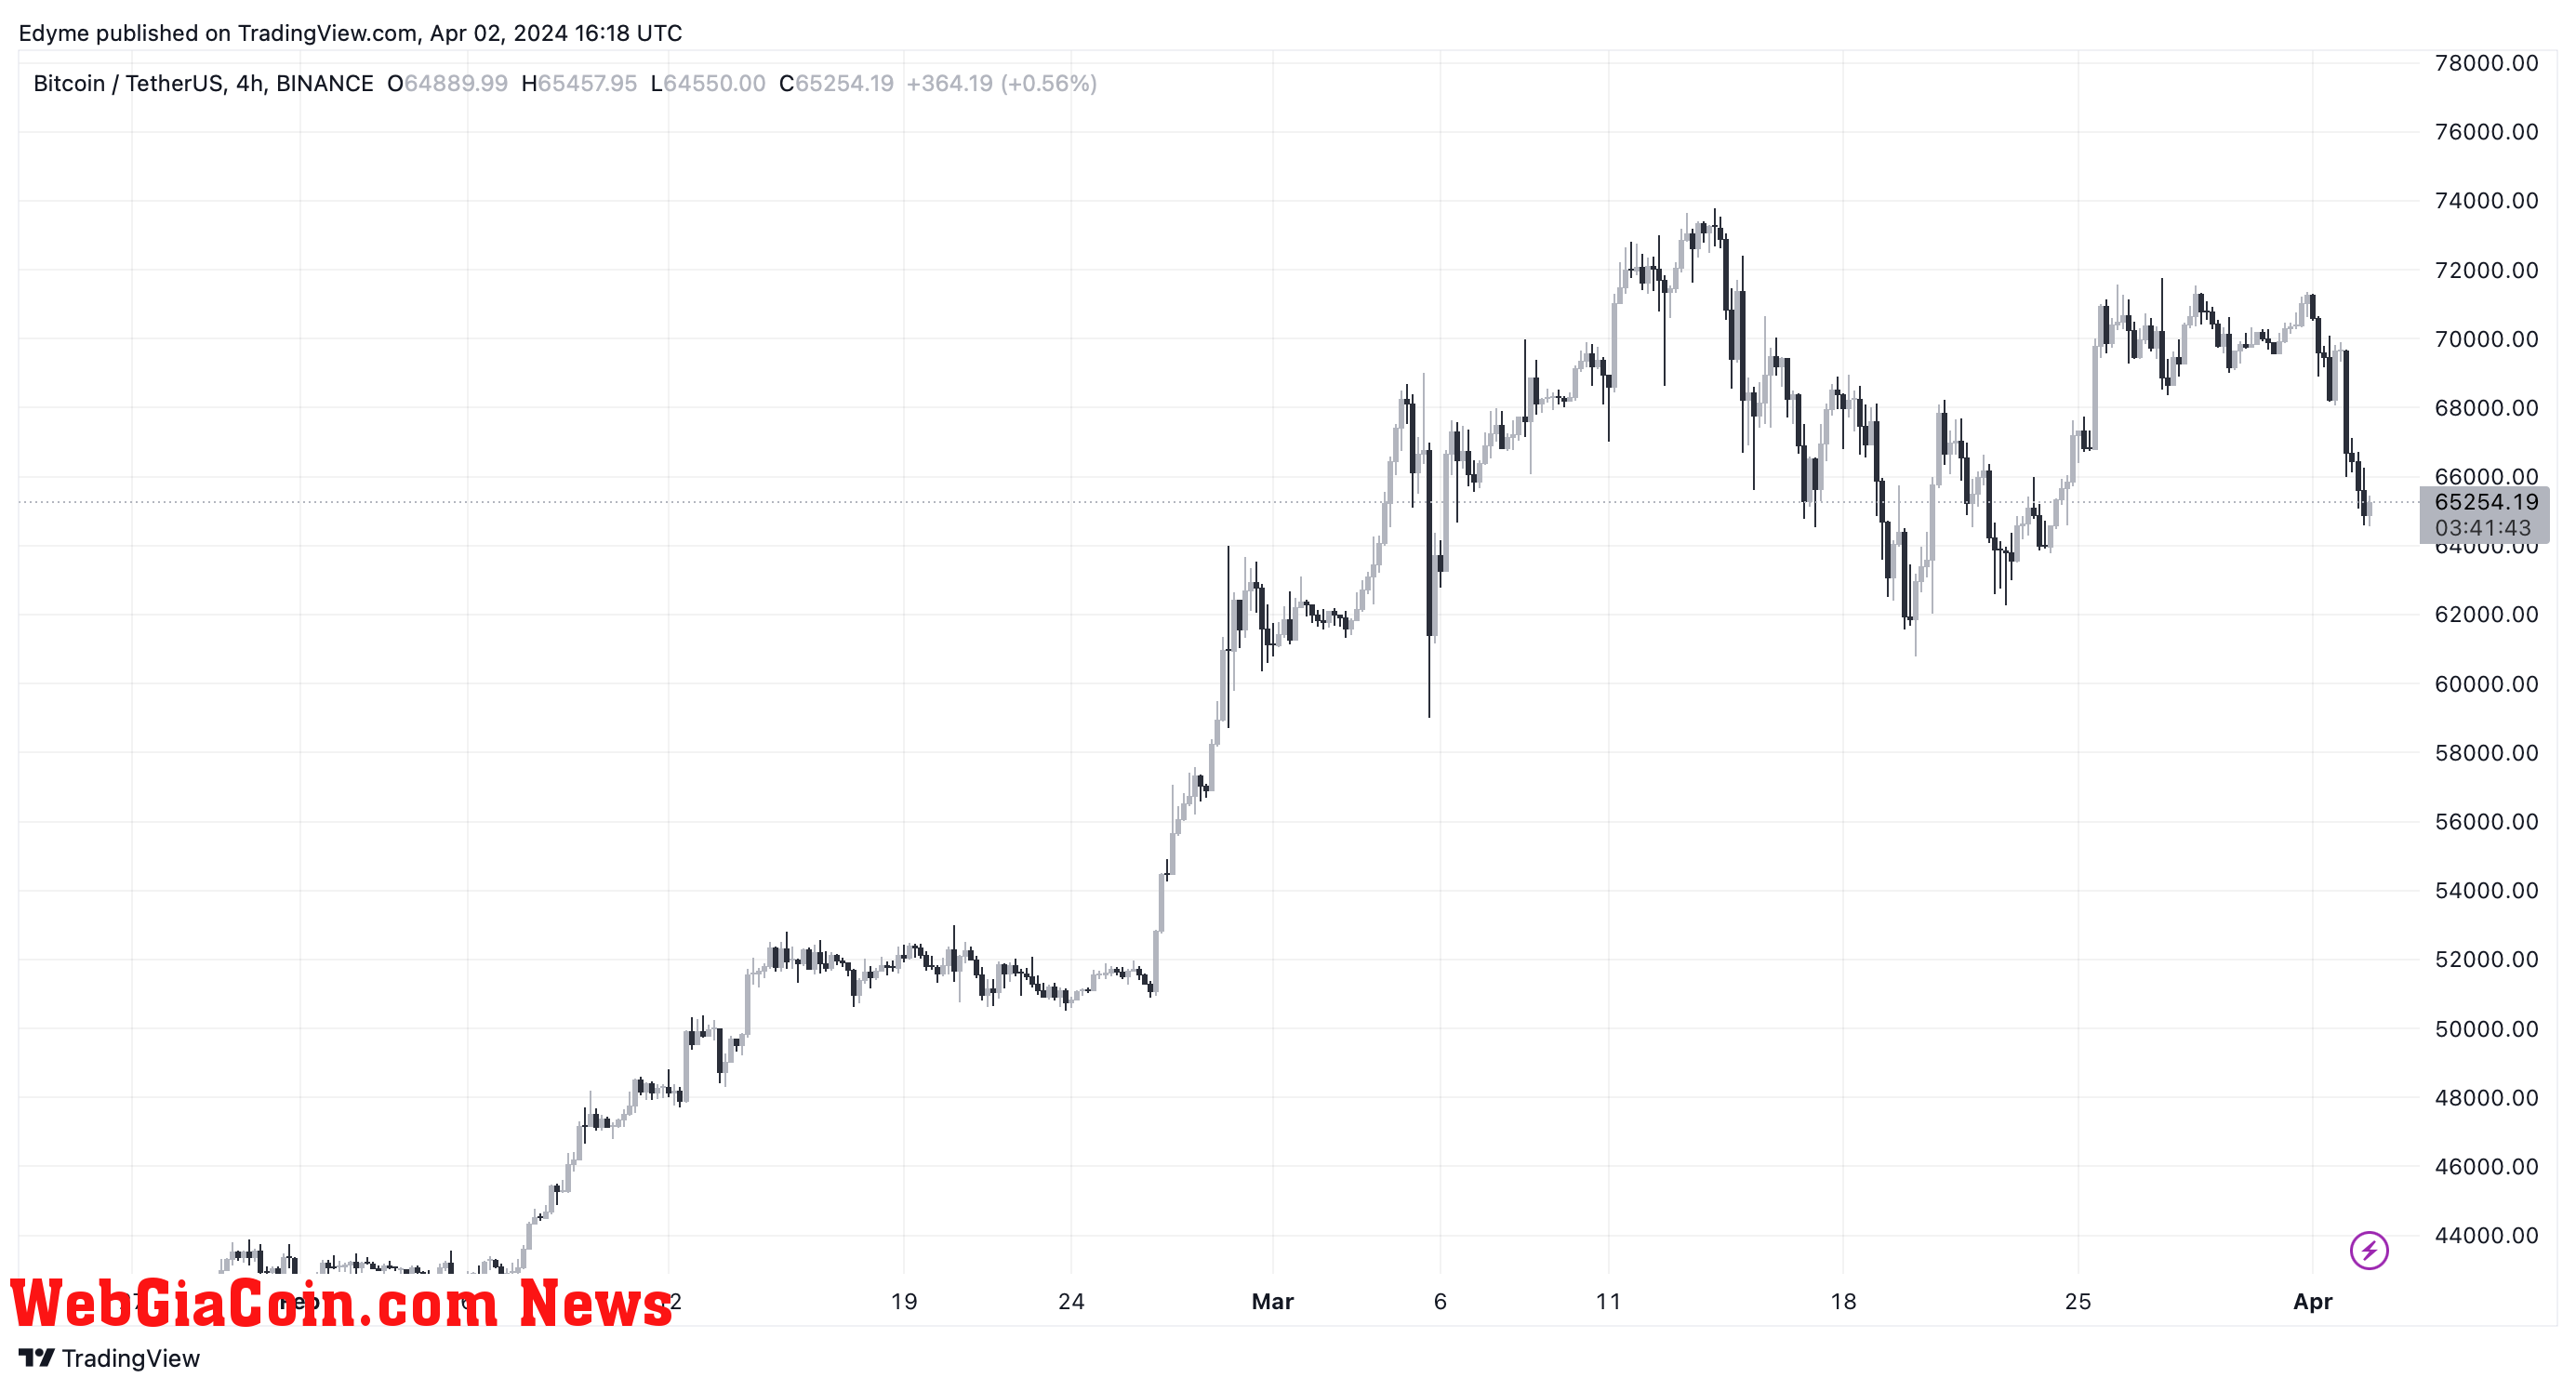 Bitcoin (BTC) price chart on TradingView